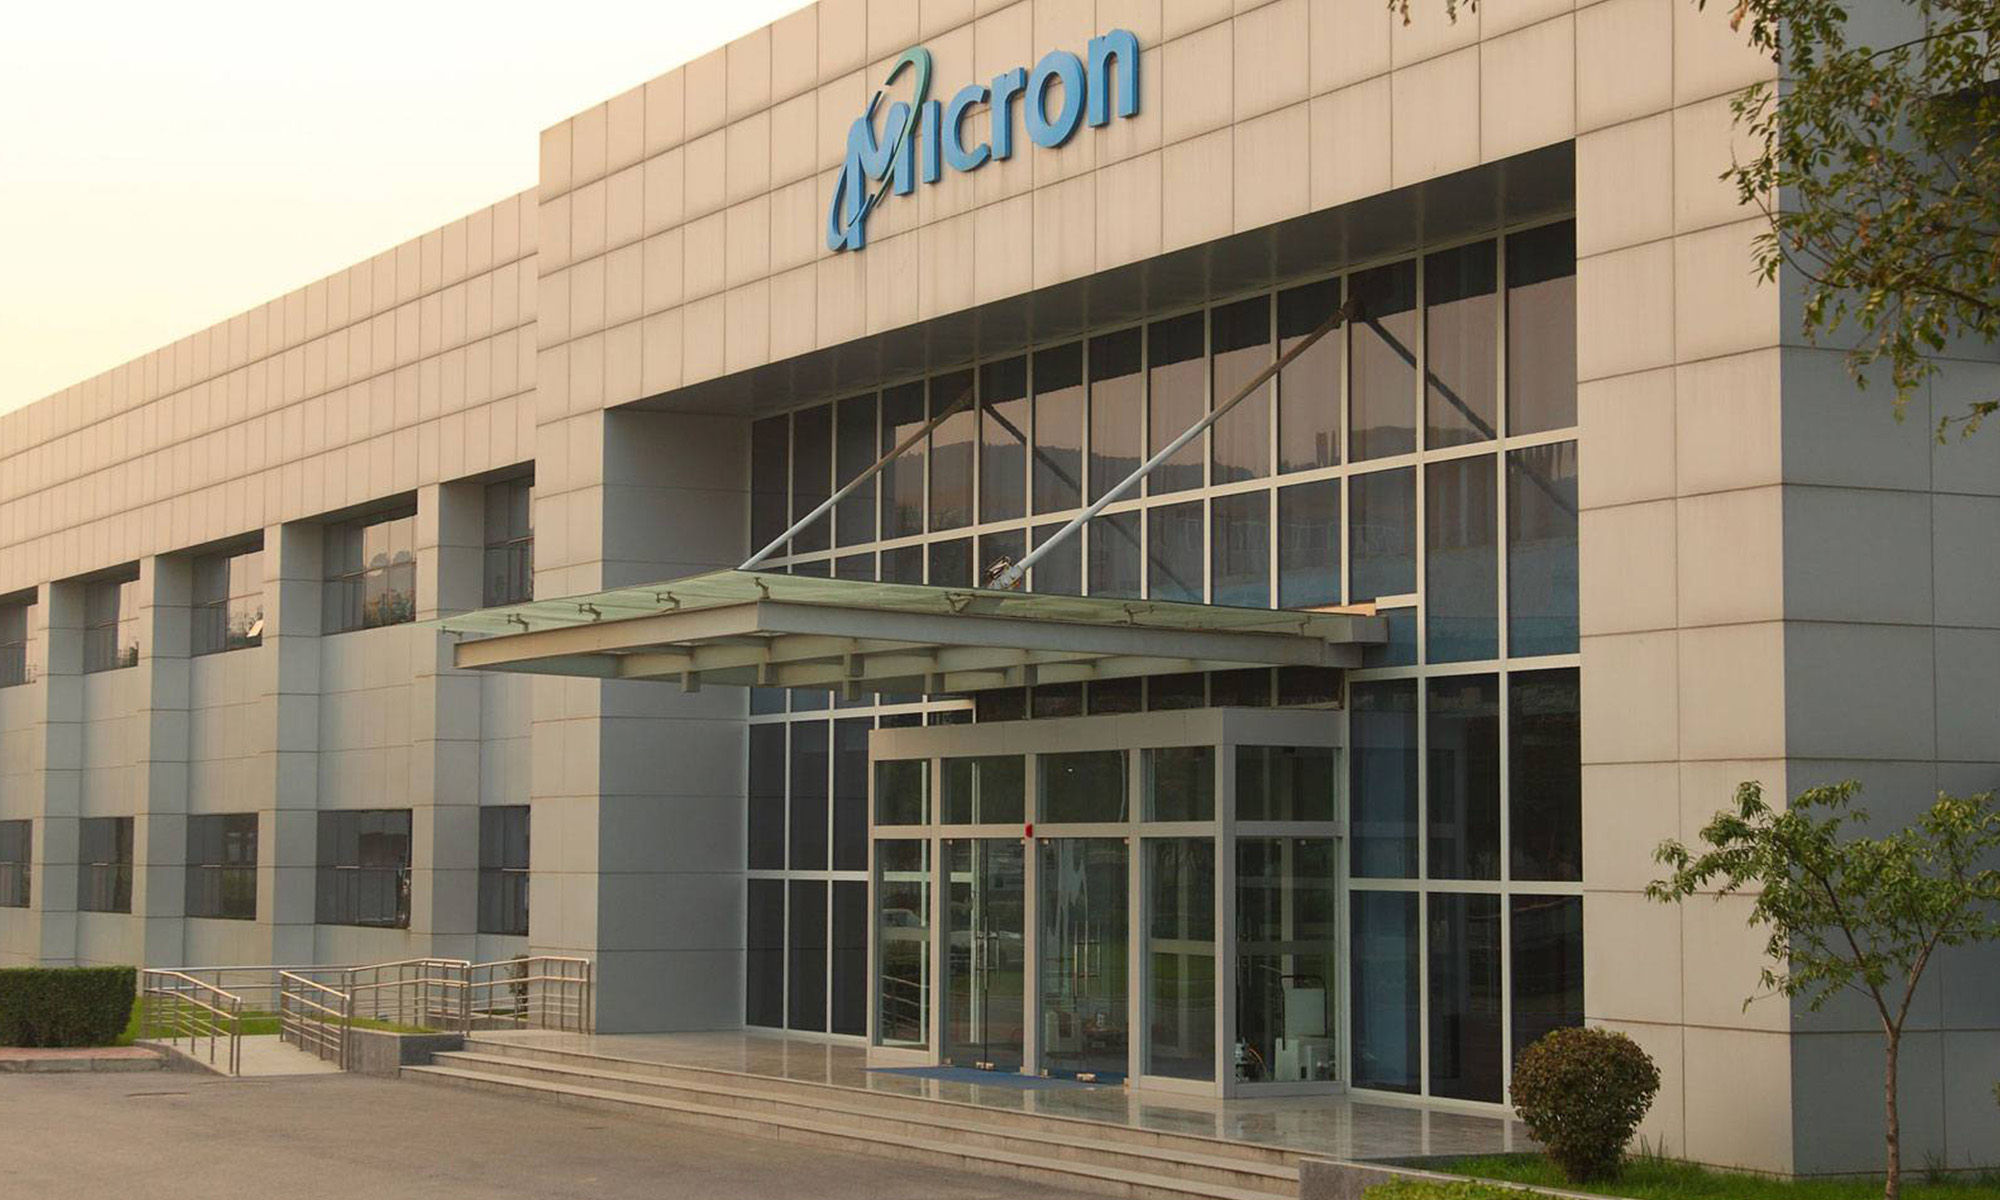 Micron building in Xi'an, China